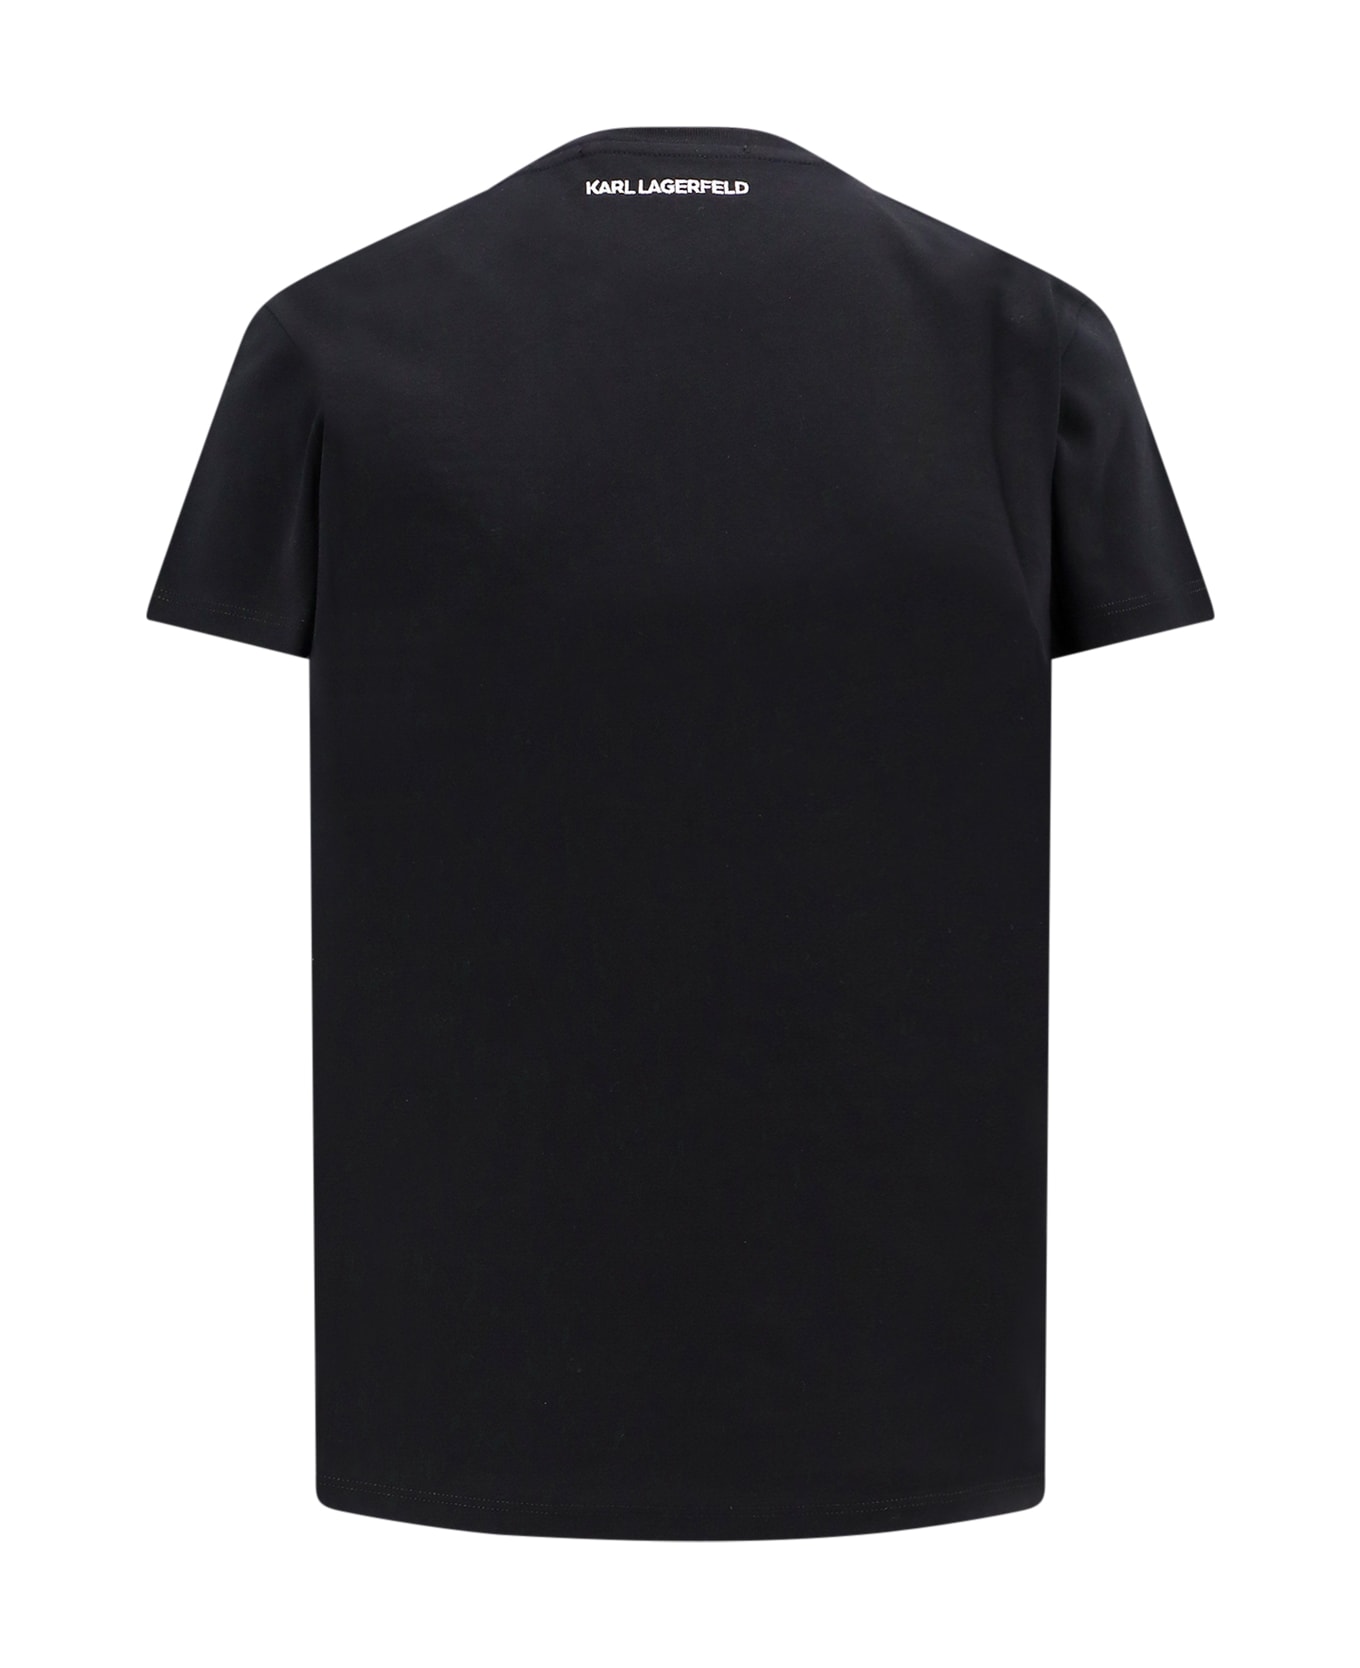 Karl Lagerfeld T-shirt - Black Tシャツ